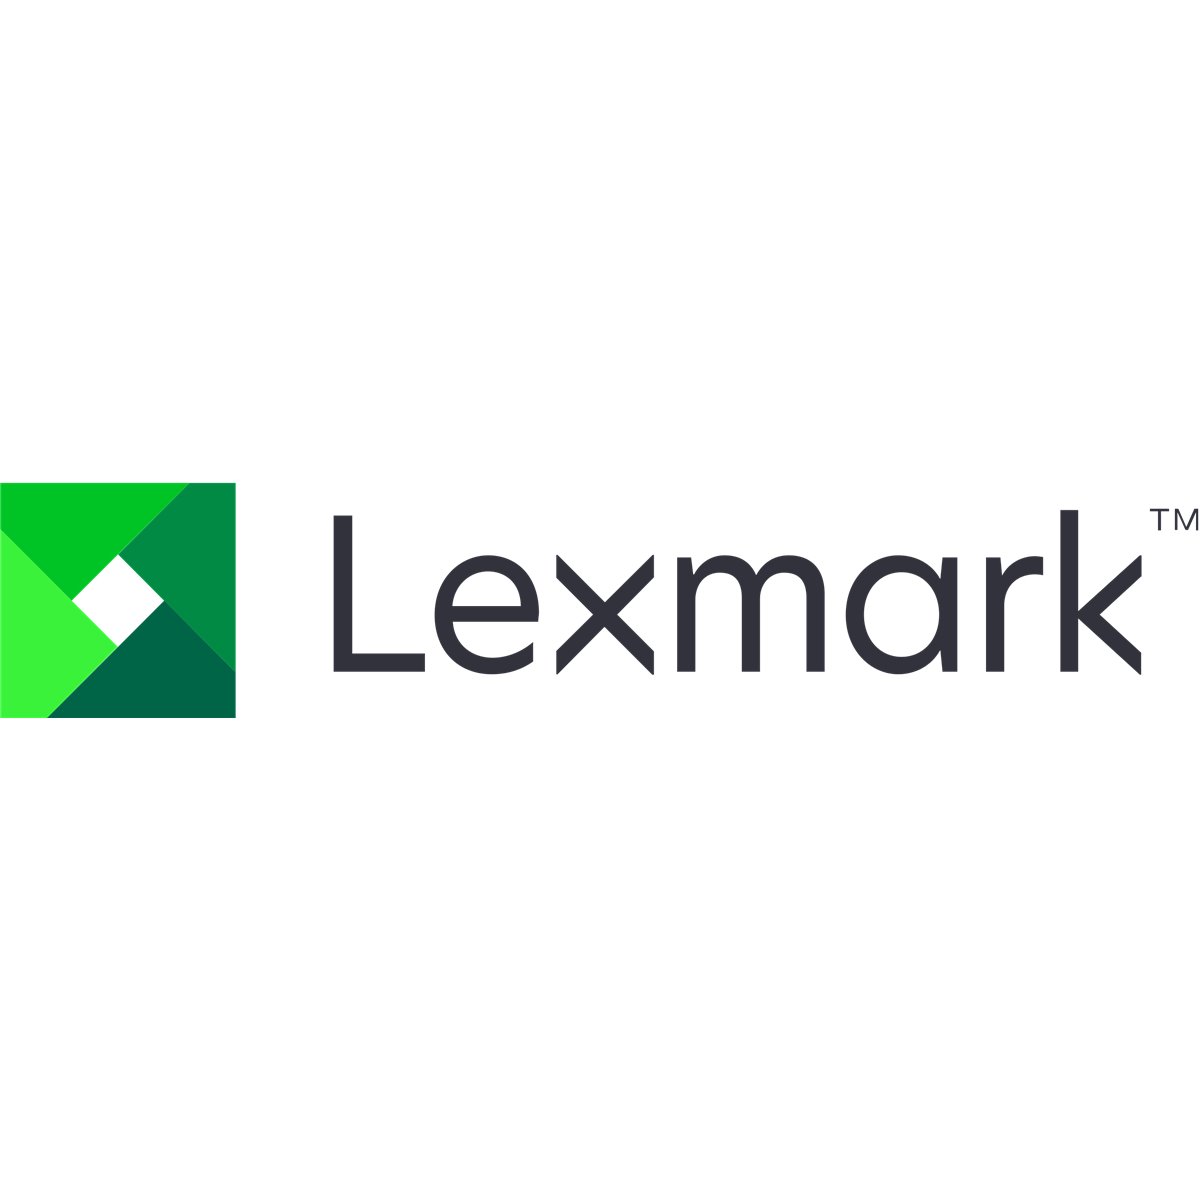 Lexmark Tray complete auto document